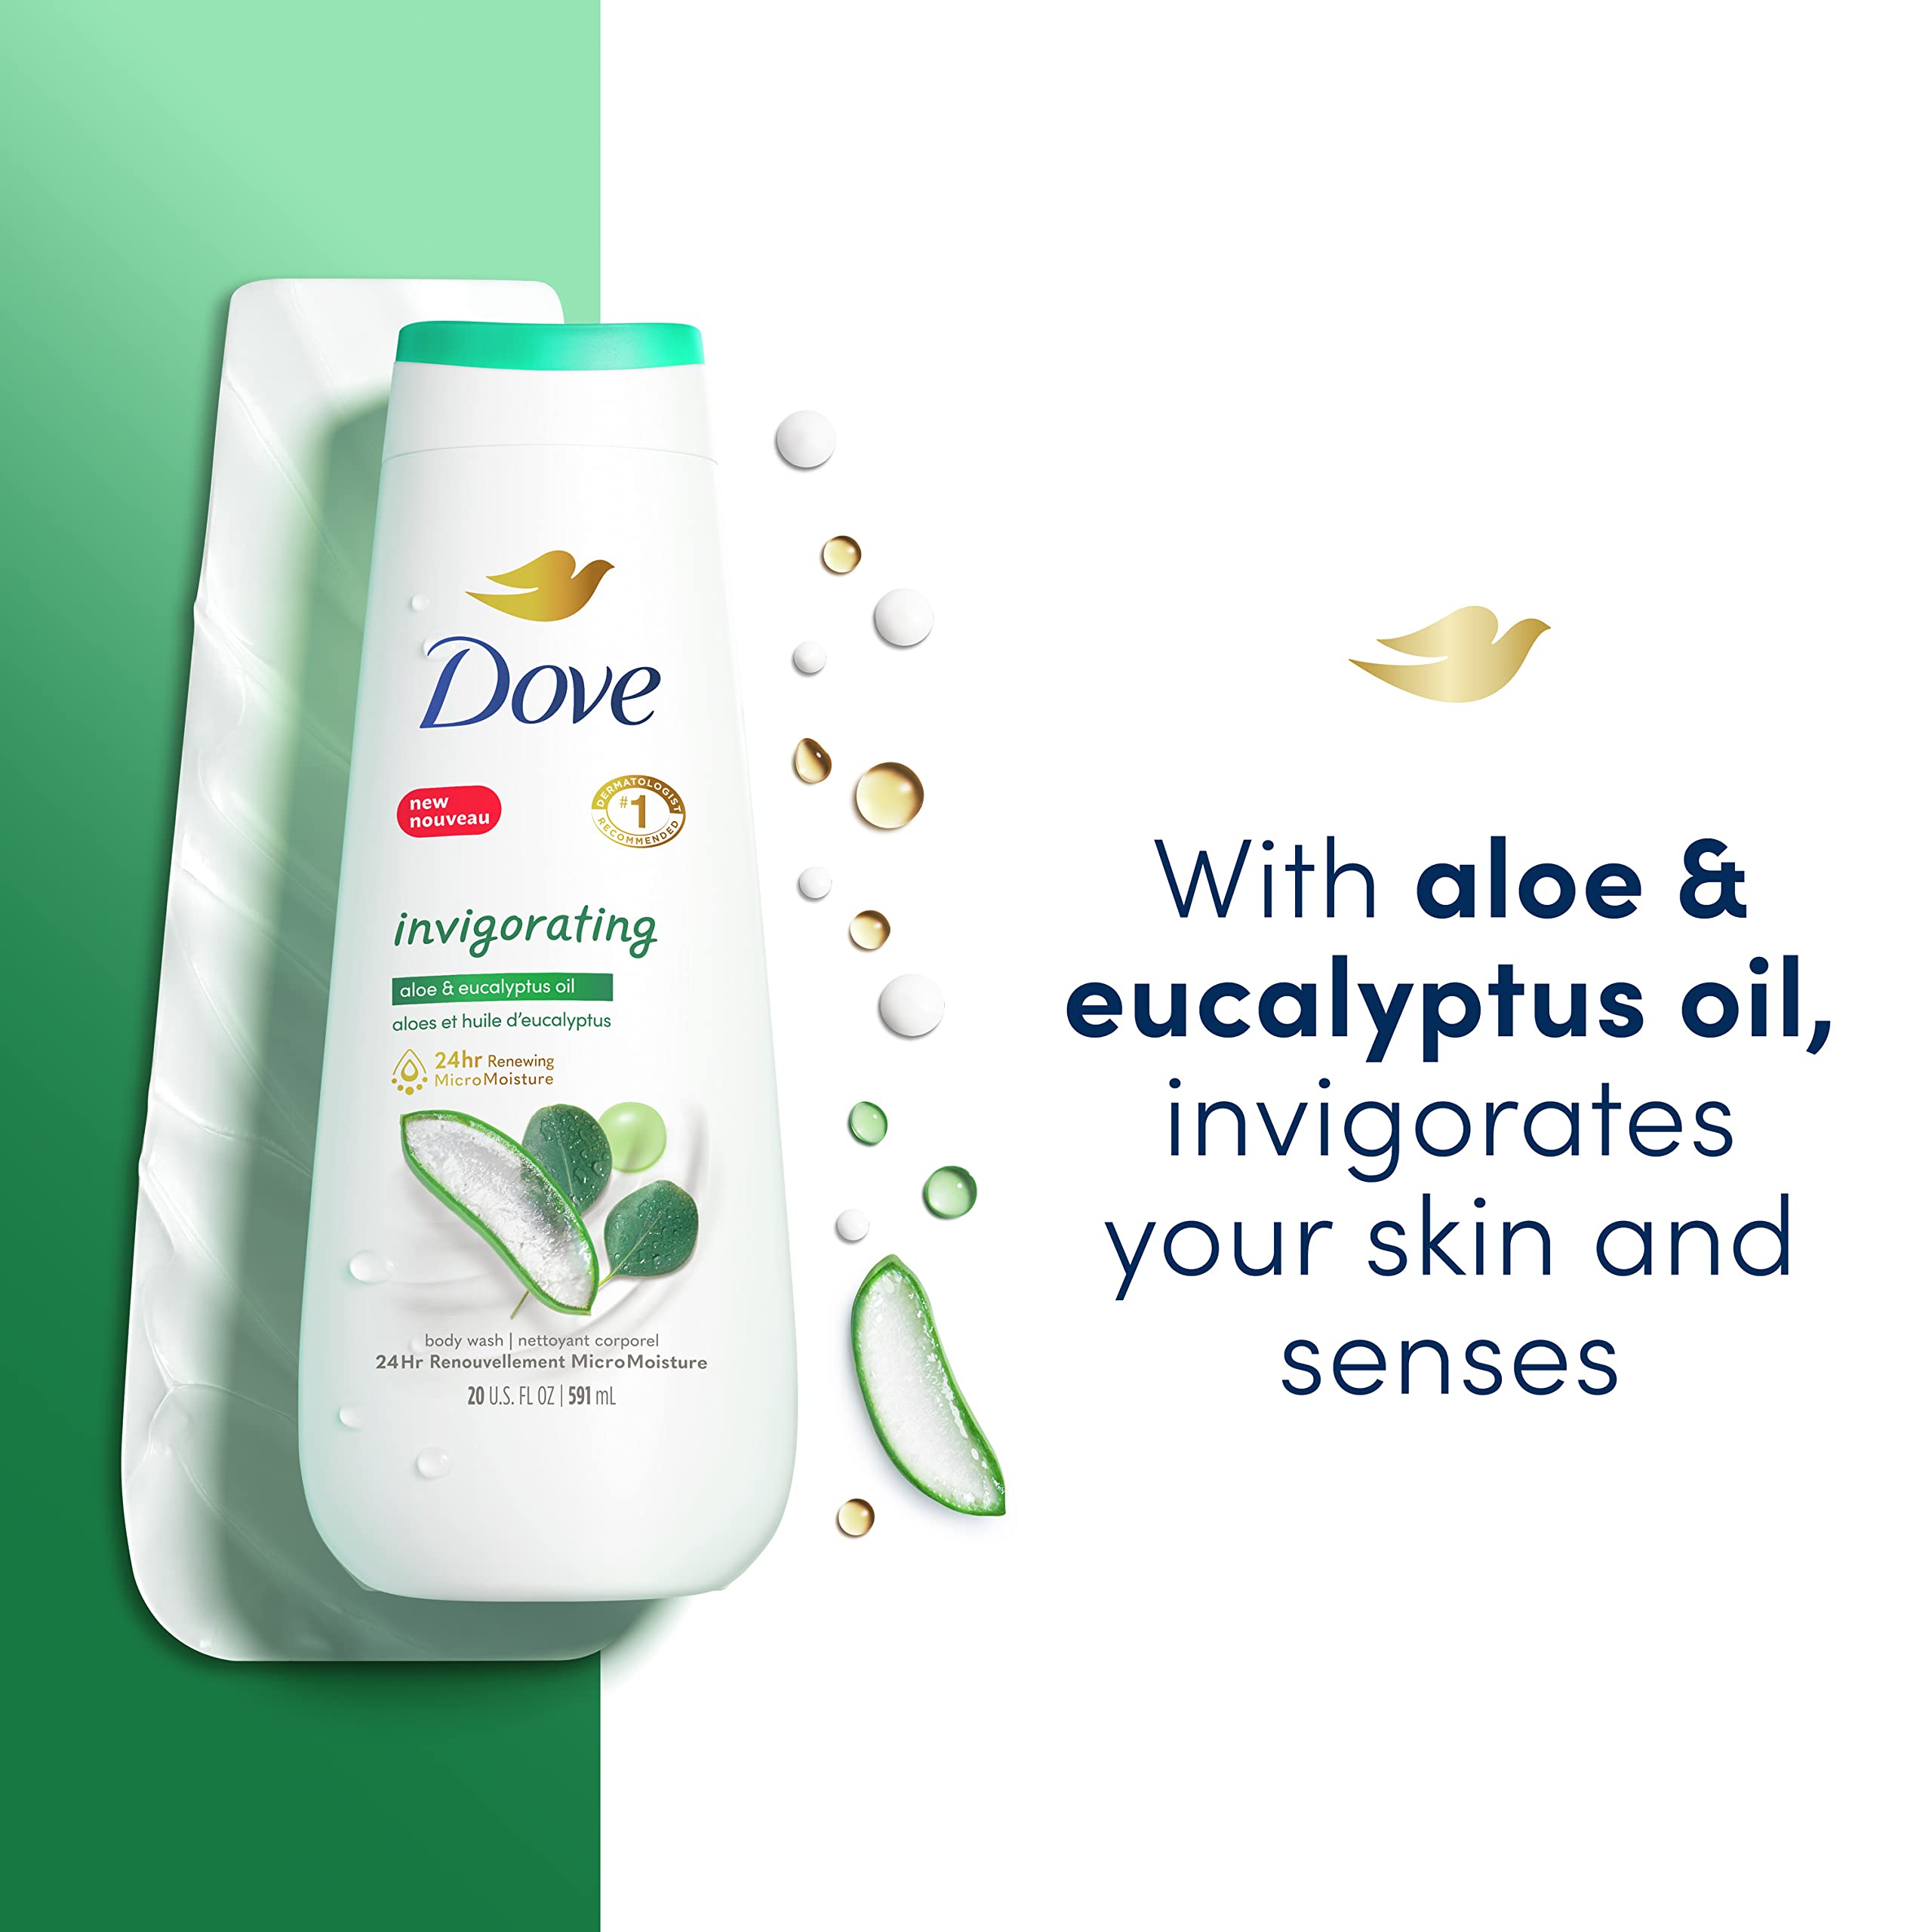 Dove Body Wash Invigorating With Aloe & Eucalyptus 4 Count For Dry Skin Refreshes and Invigorates Skin 20 oz